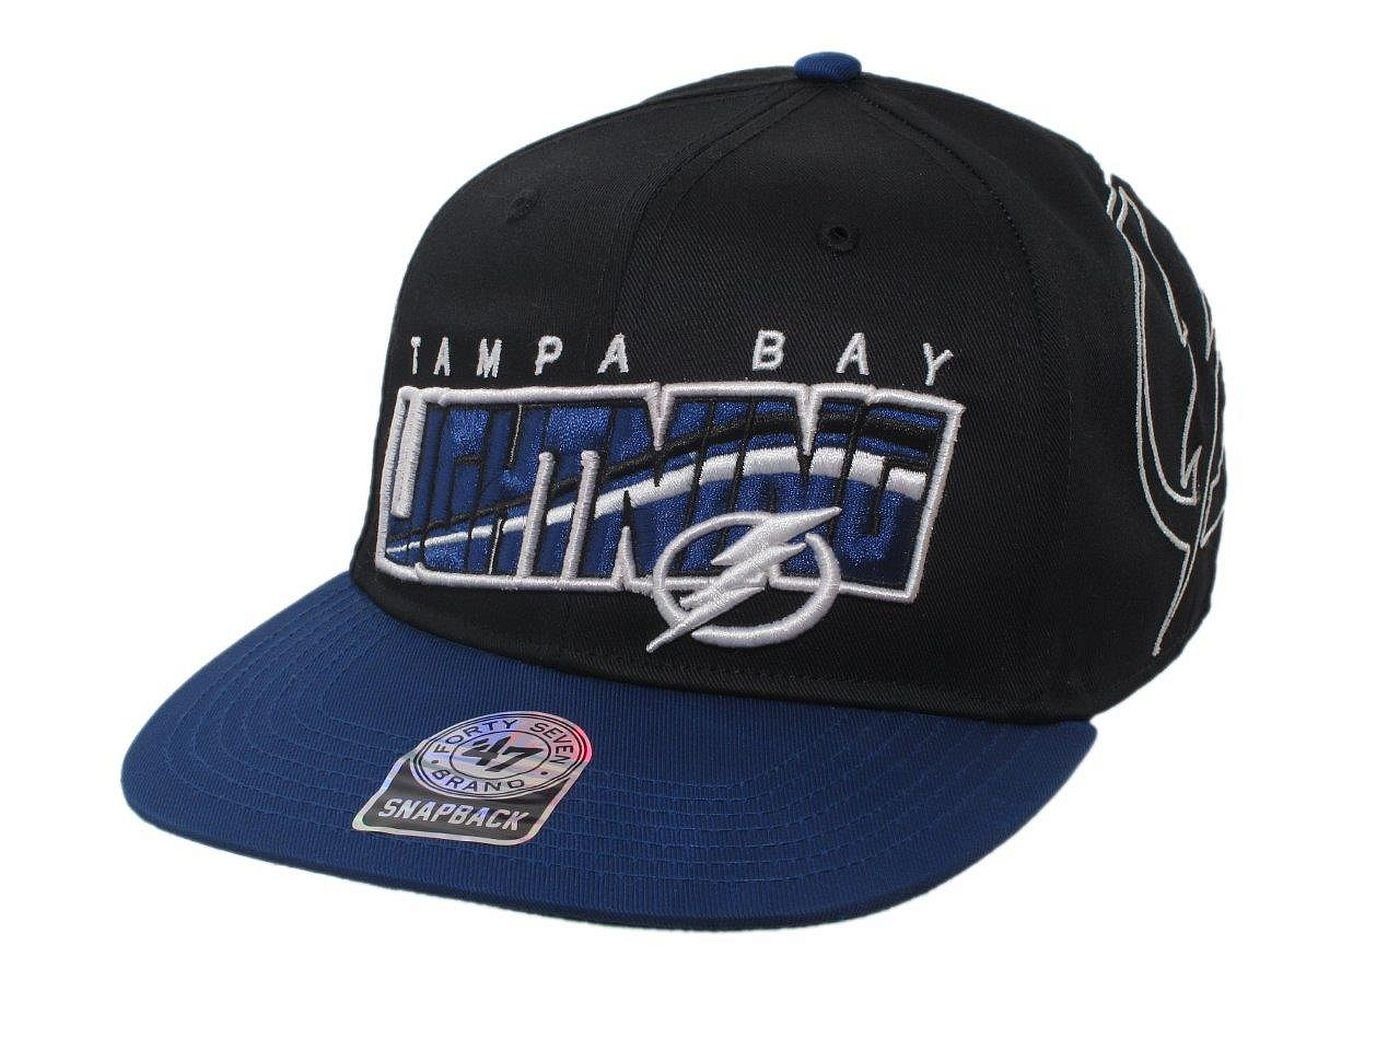 '47 Brand Baseball Cap 47 Brand - NHL Cap Basecap Kappe Mütze Eishockey "Tampa Bay" (Nr. 89) | Baseball Caps